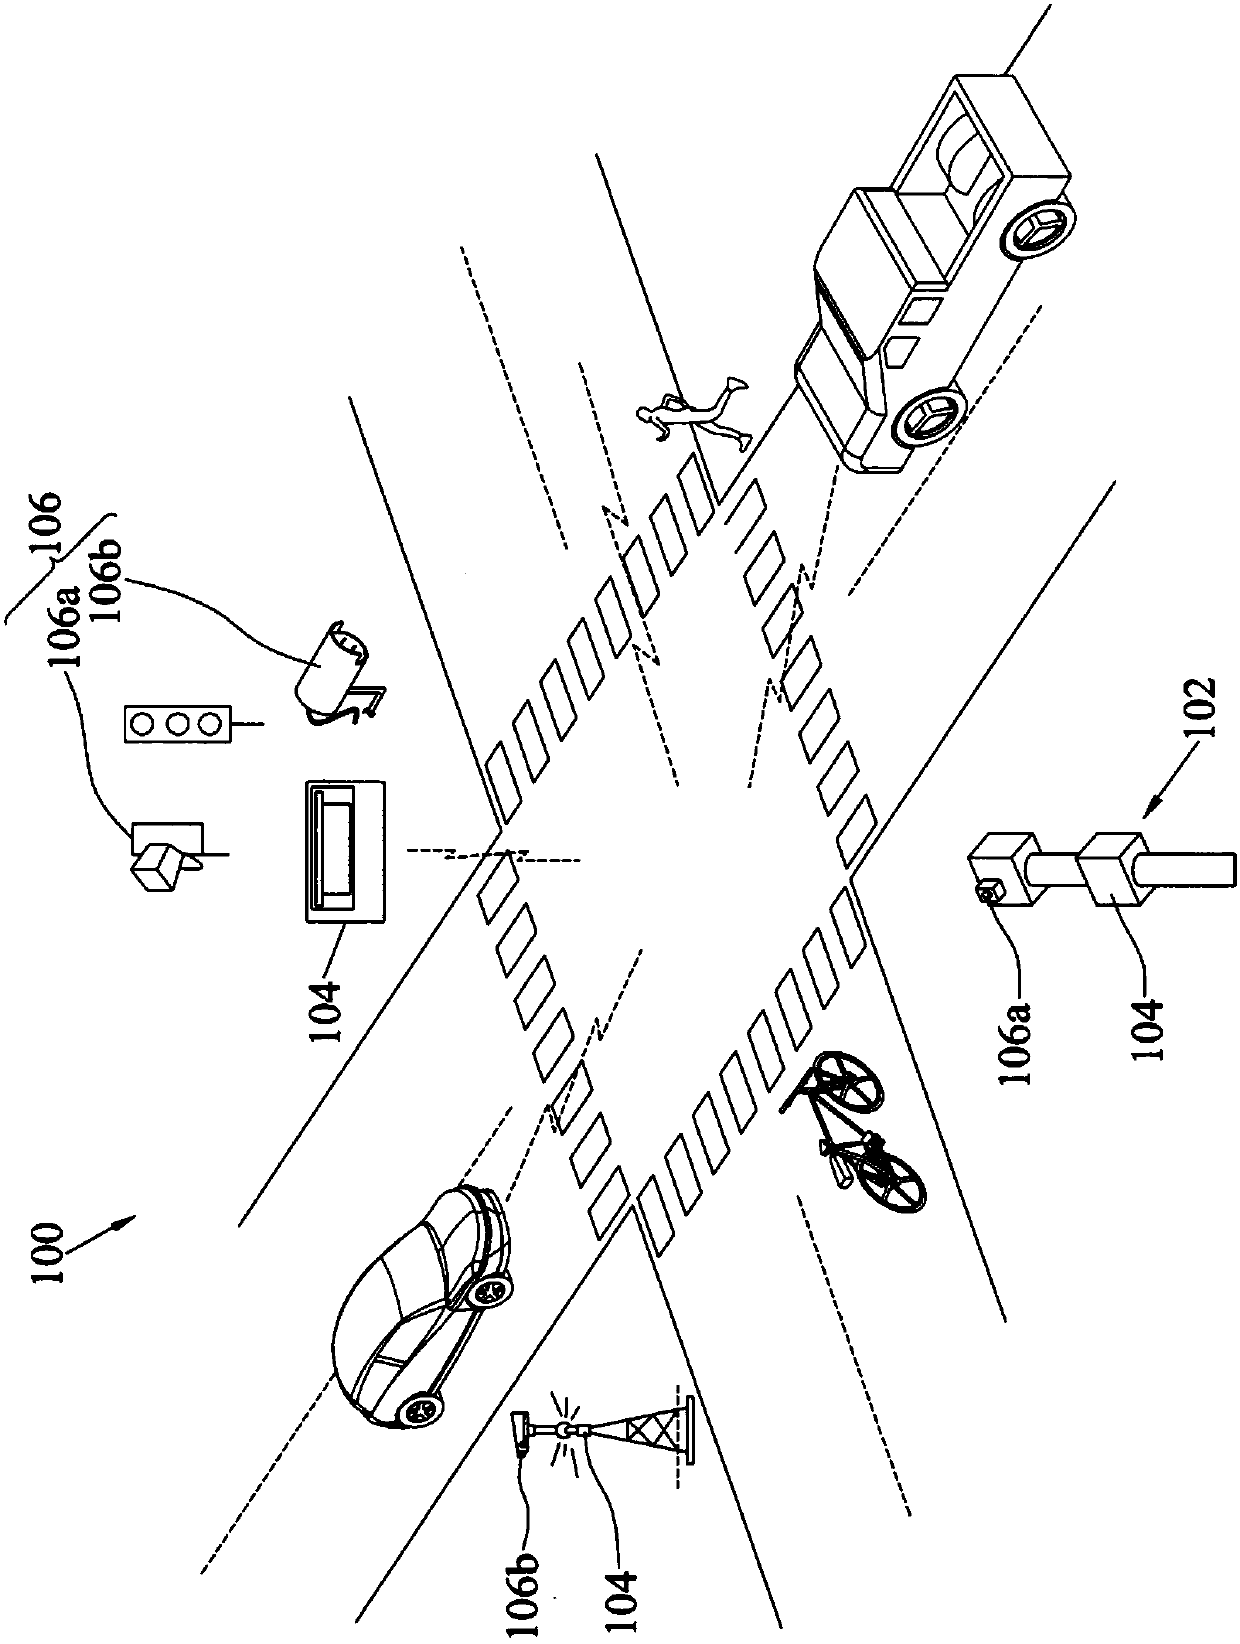 Roadside detection system, roadside unit and roadside communication method thereof